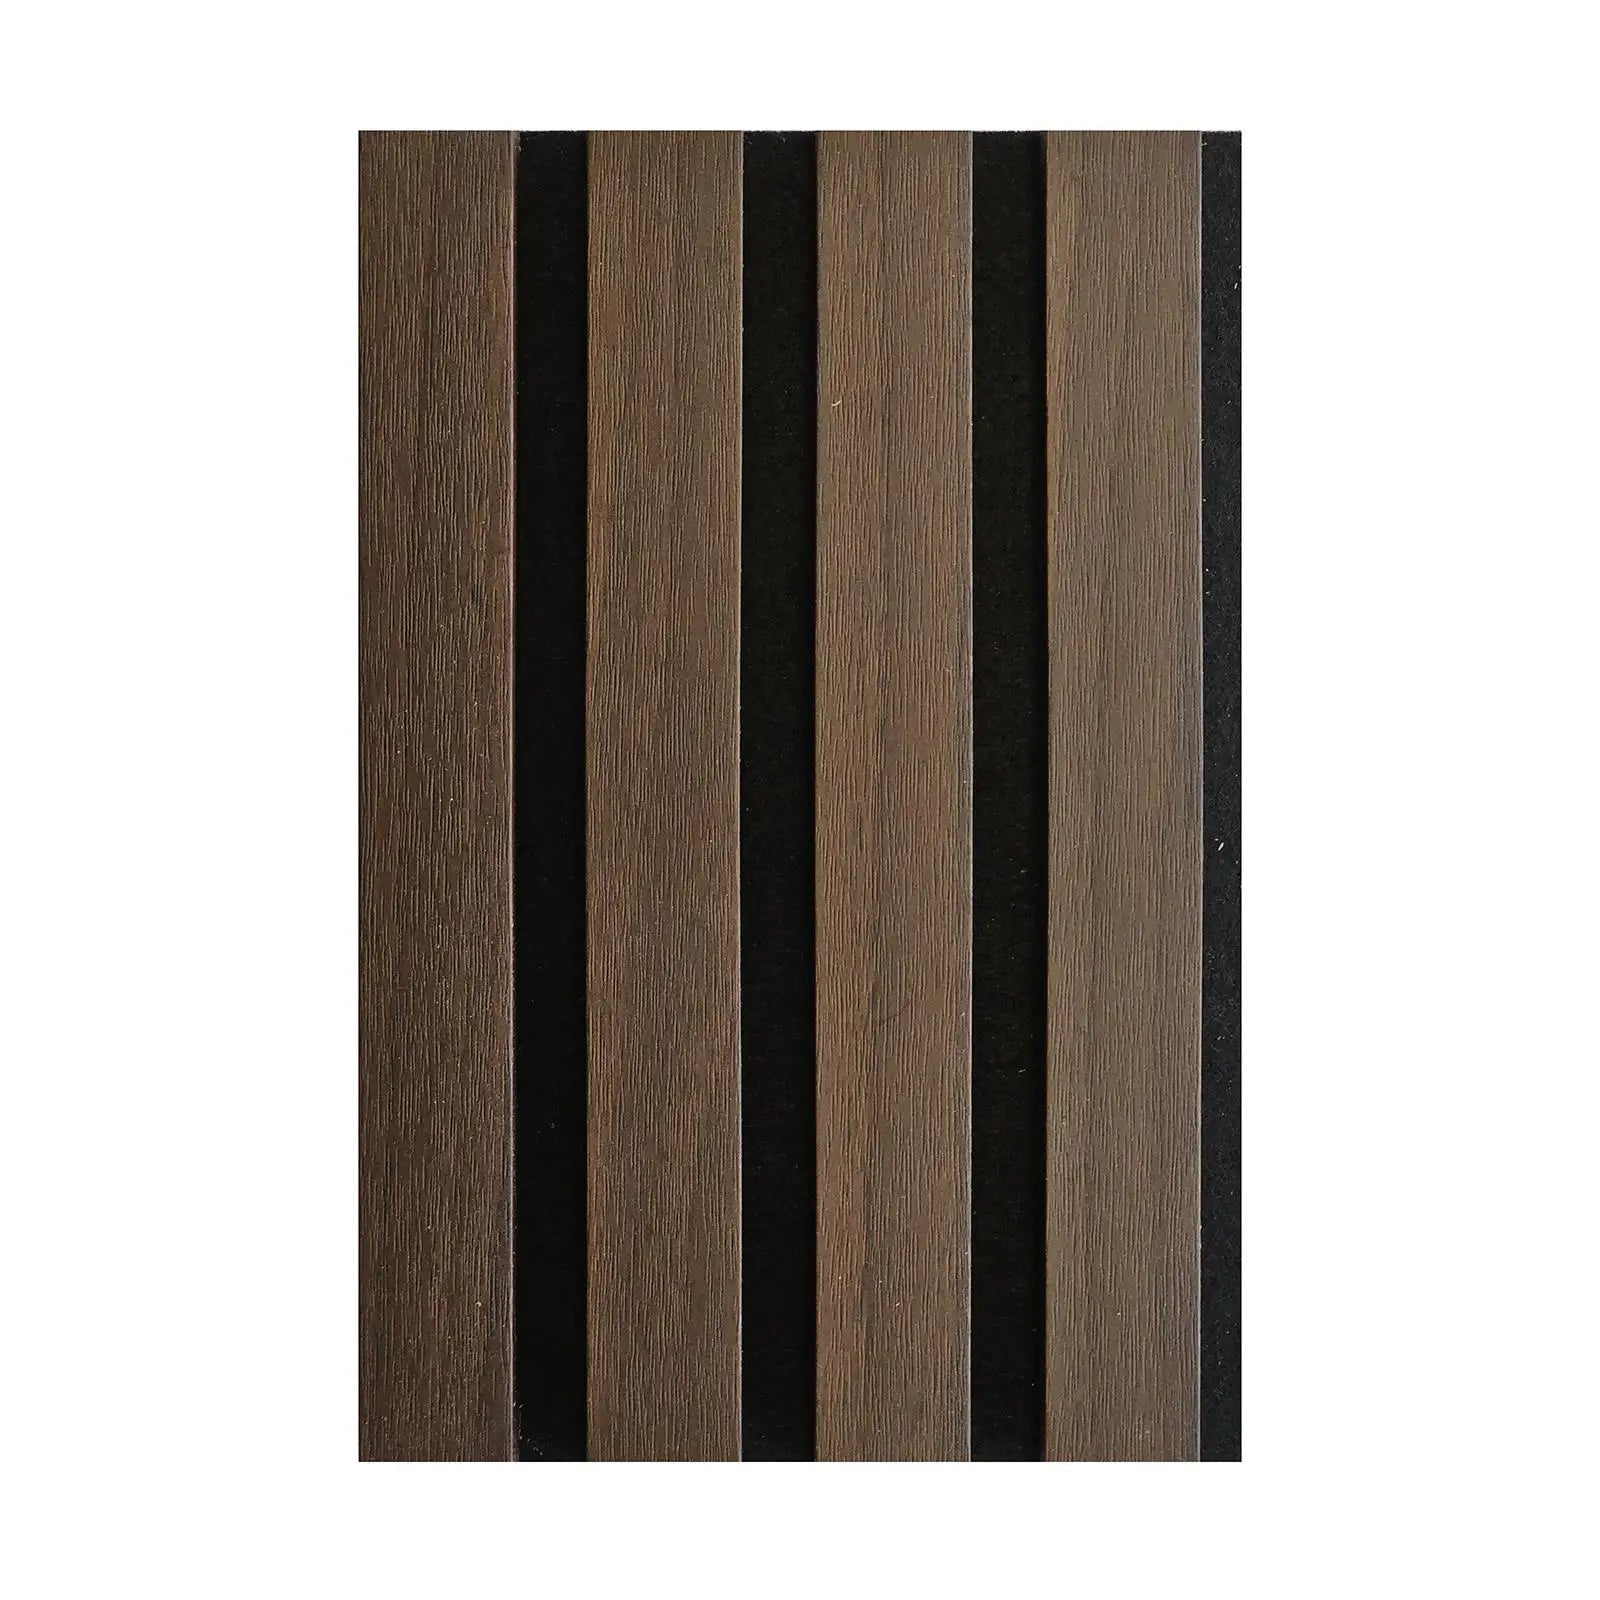 Acoustic Slat Wood Wall Panel - Smoked Oak - SAMPLE